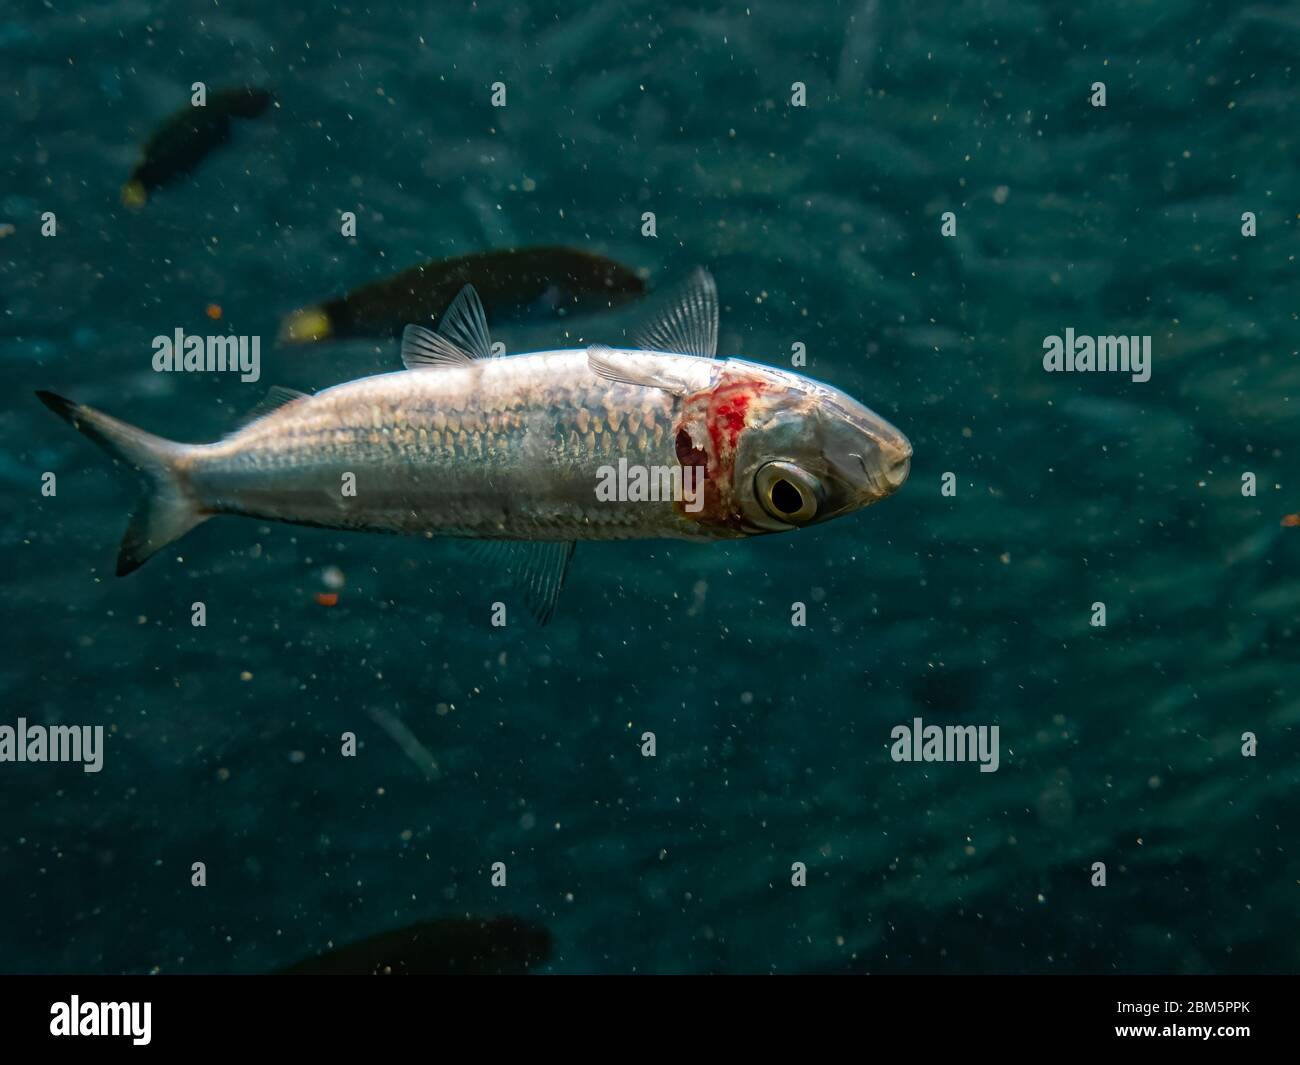 Dead fish floating underwater. Stock Photo